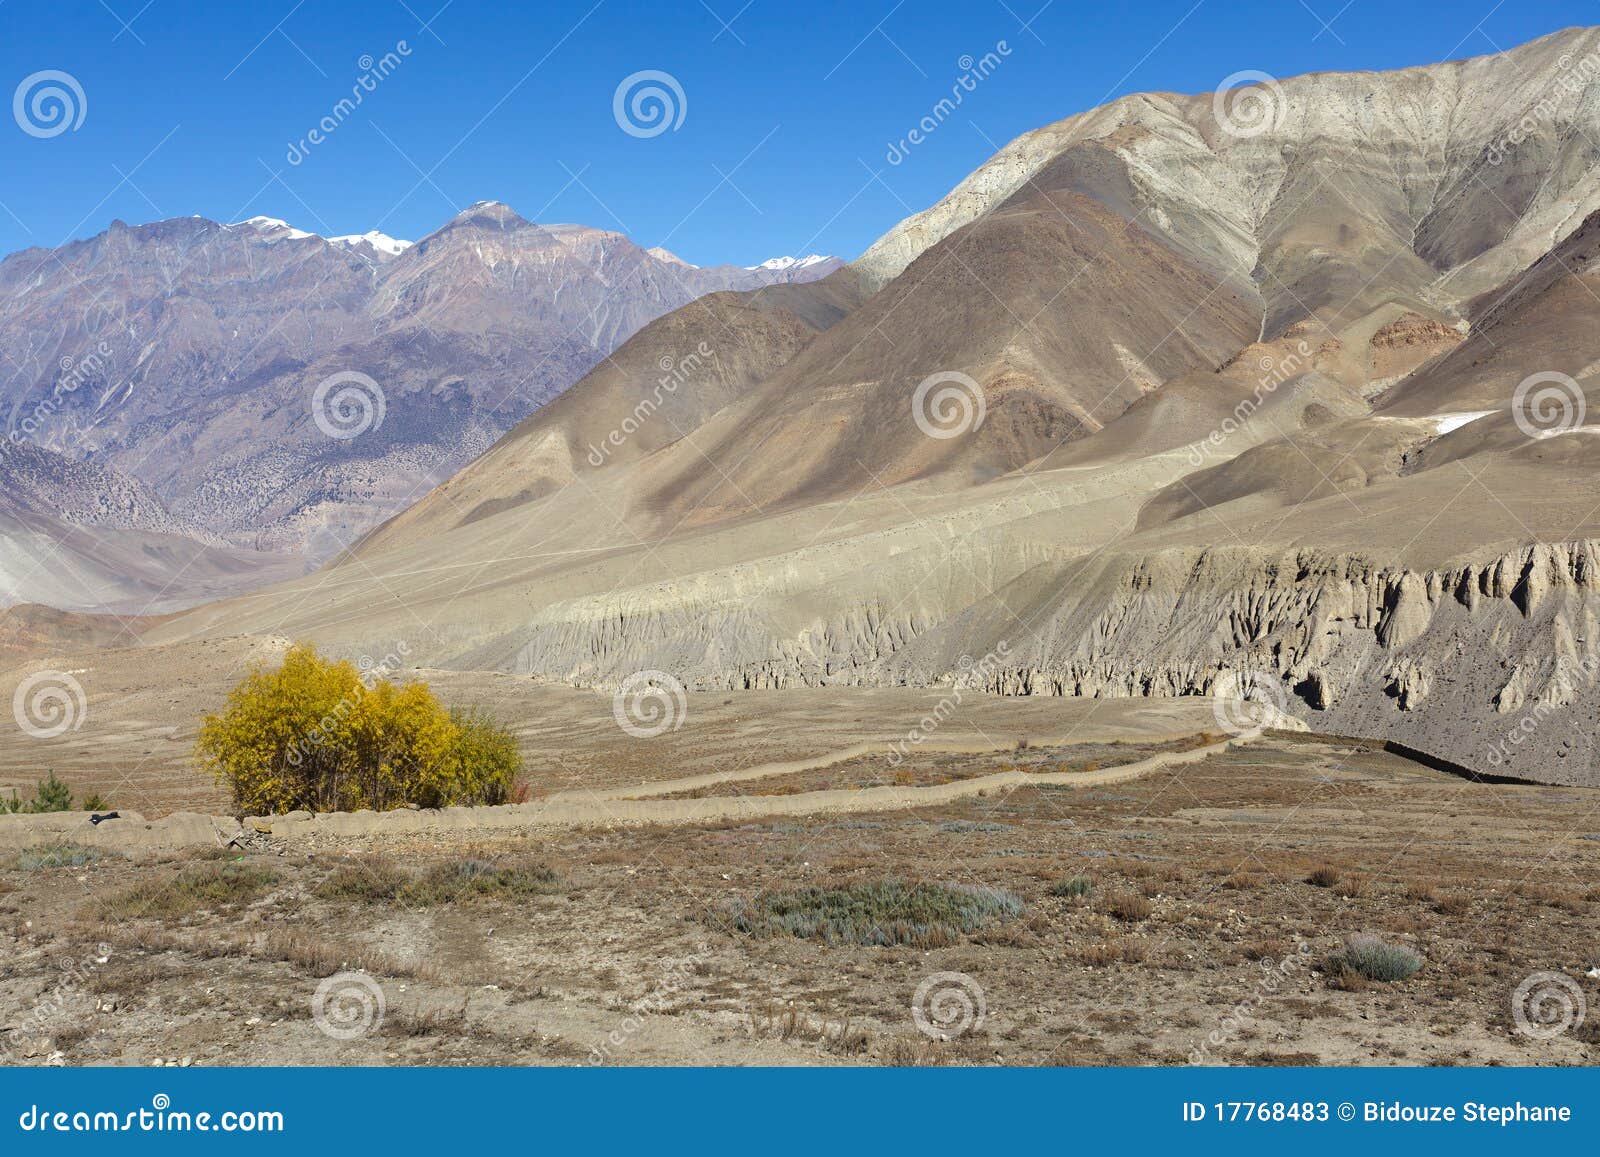 nepal arid mountains